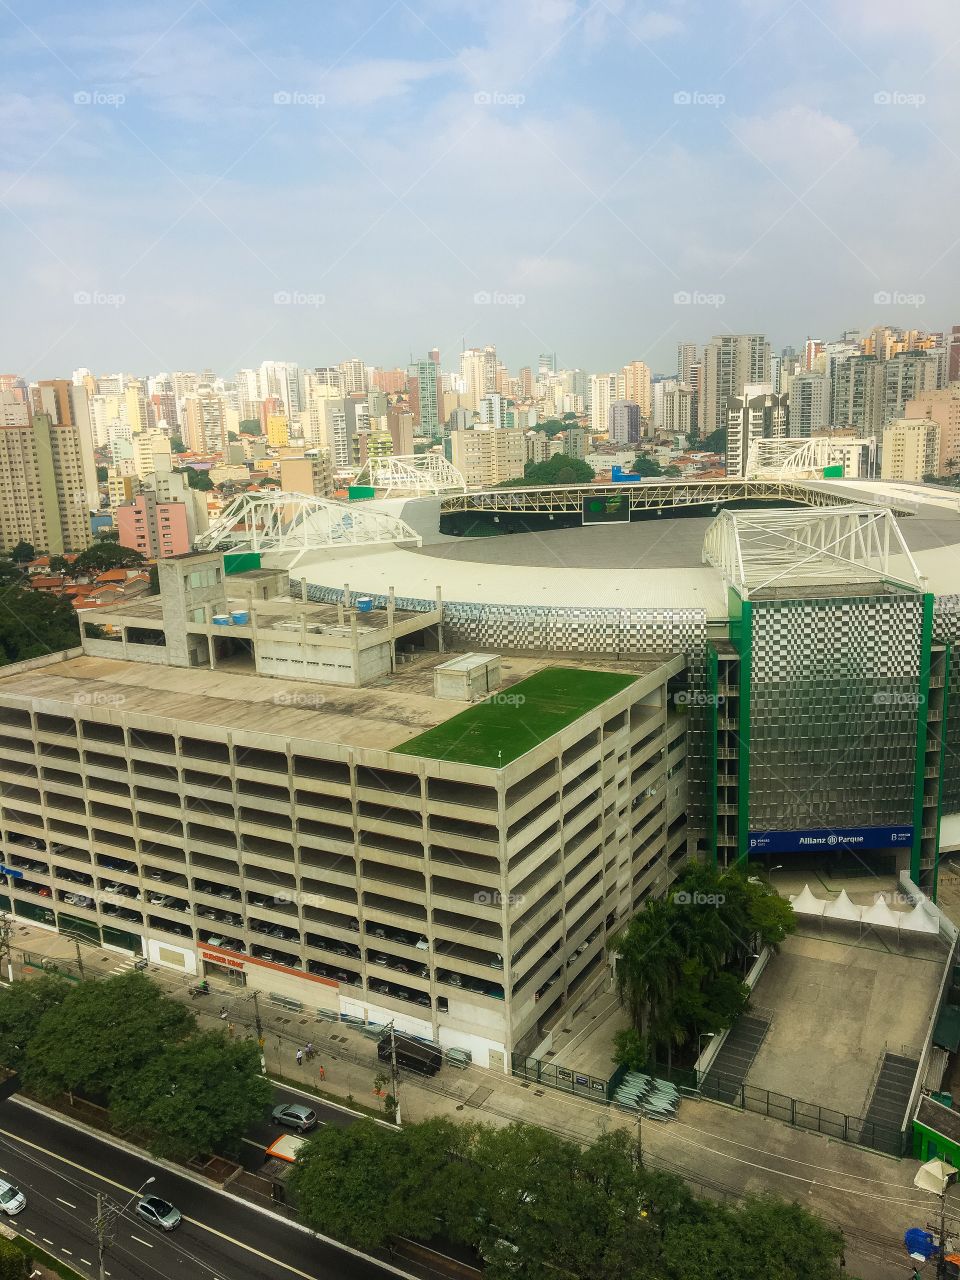 Palmeiras - Allianz Park - São Paulo - Brazil